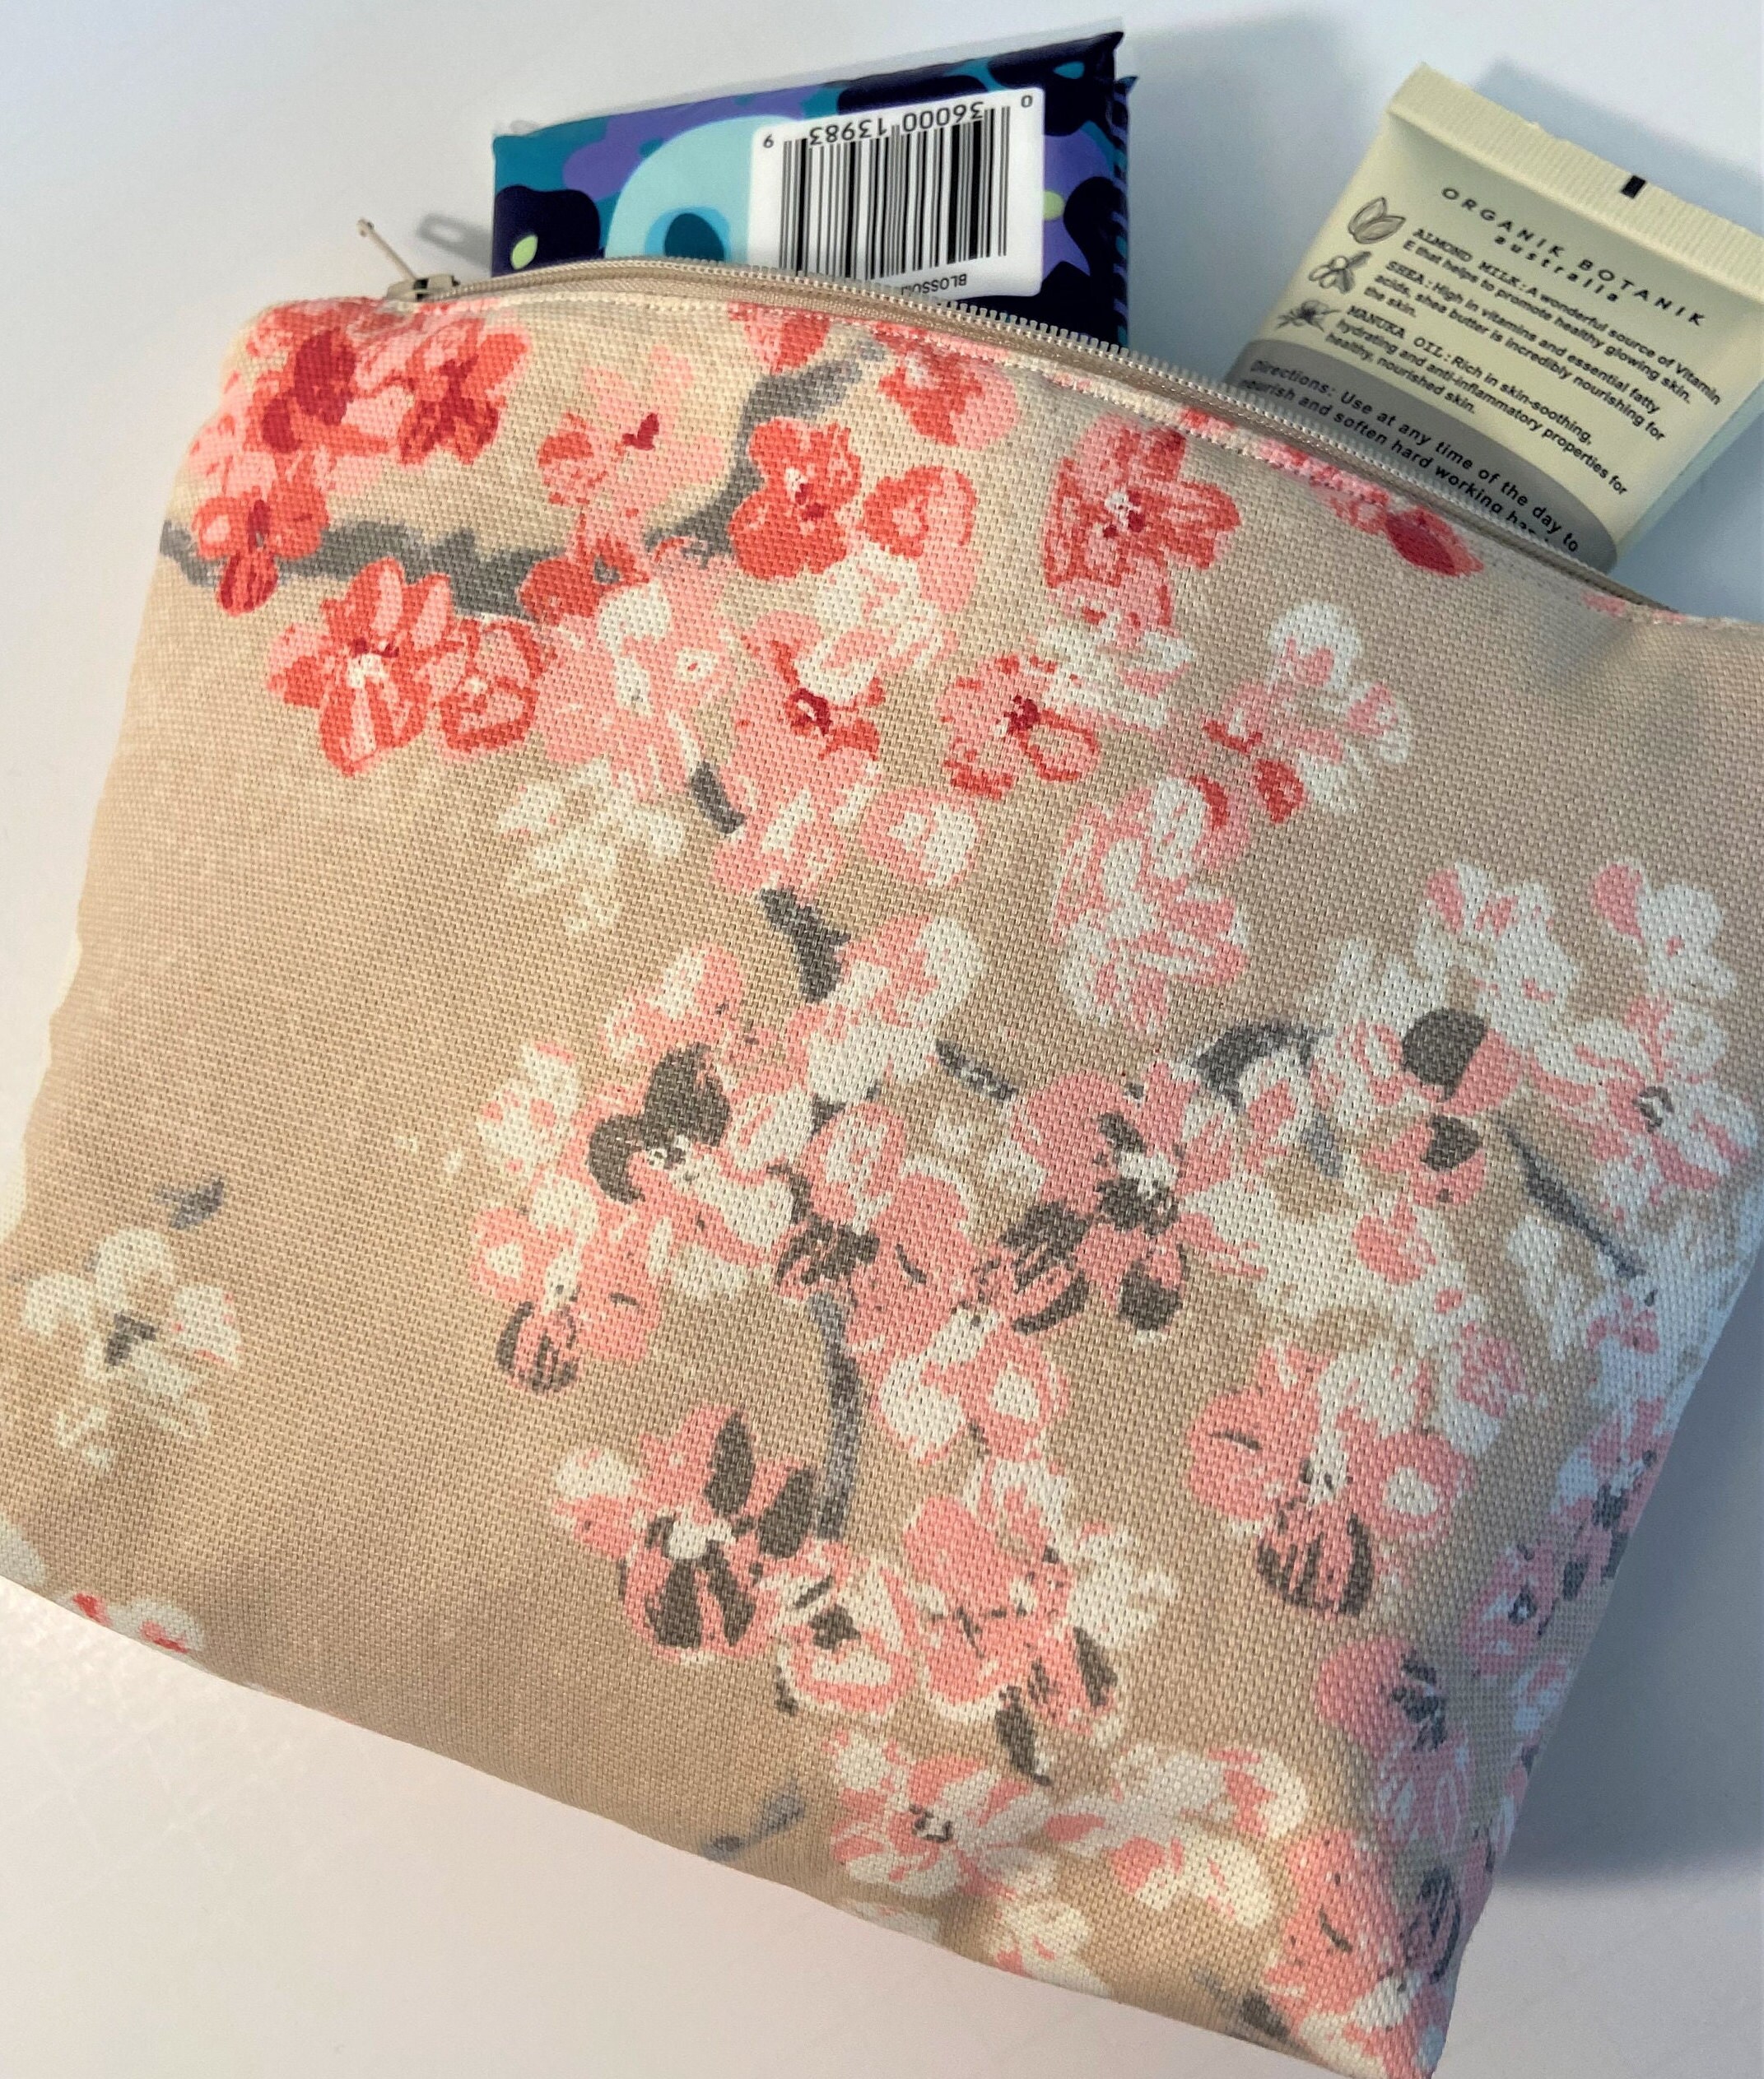 SIDONKU Canvas Tote Bag Tree Cherry Blossom Sakura Flowers Pink on Branch  Flat Reusable Shoulder Grocery Shopping Bags Handbag